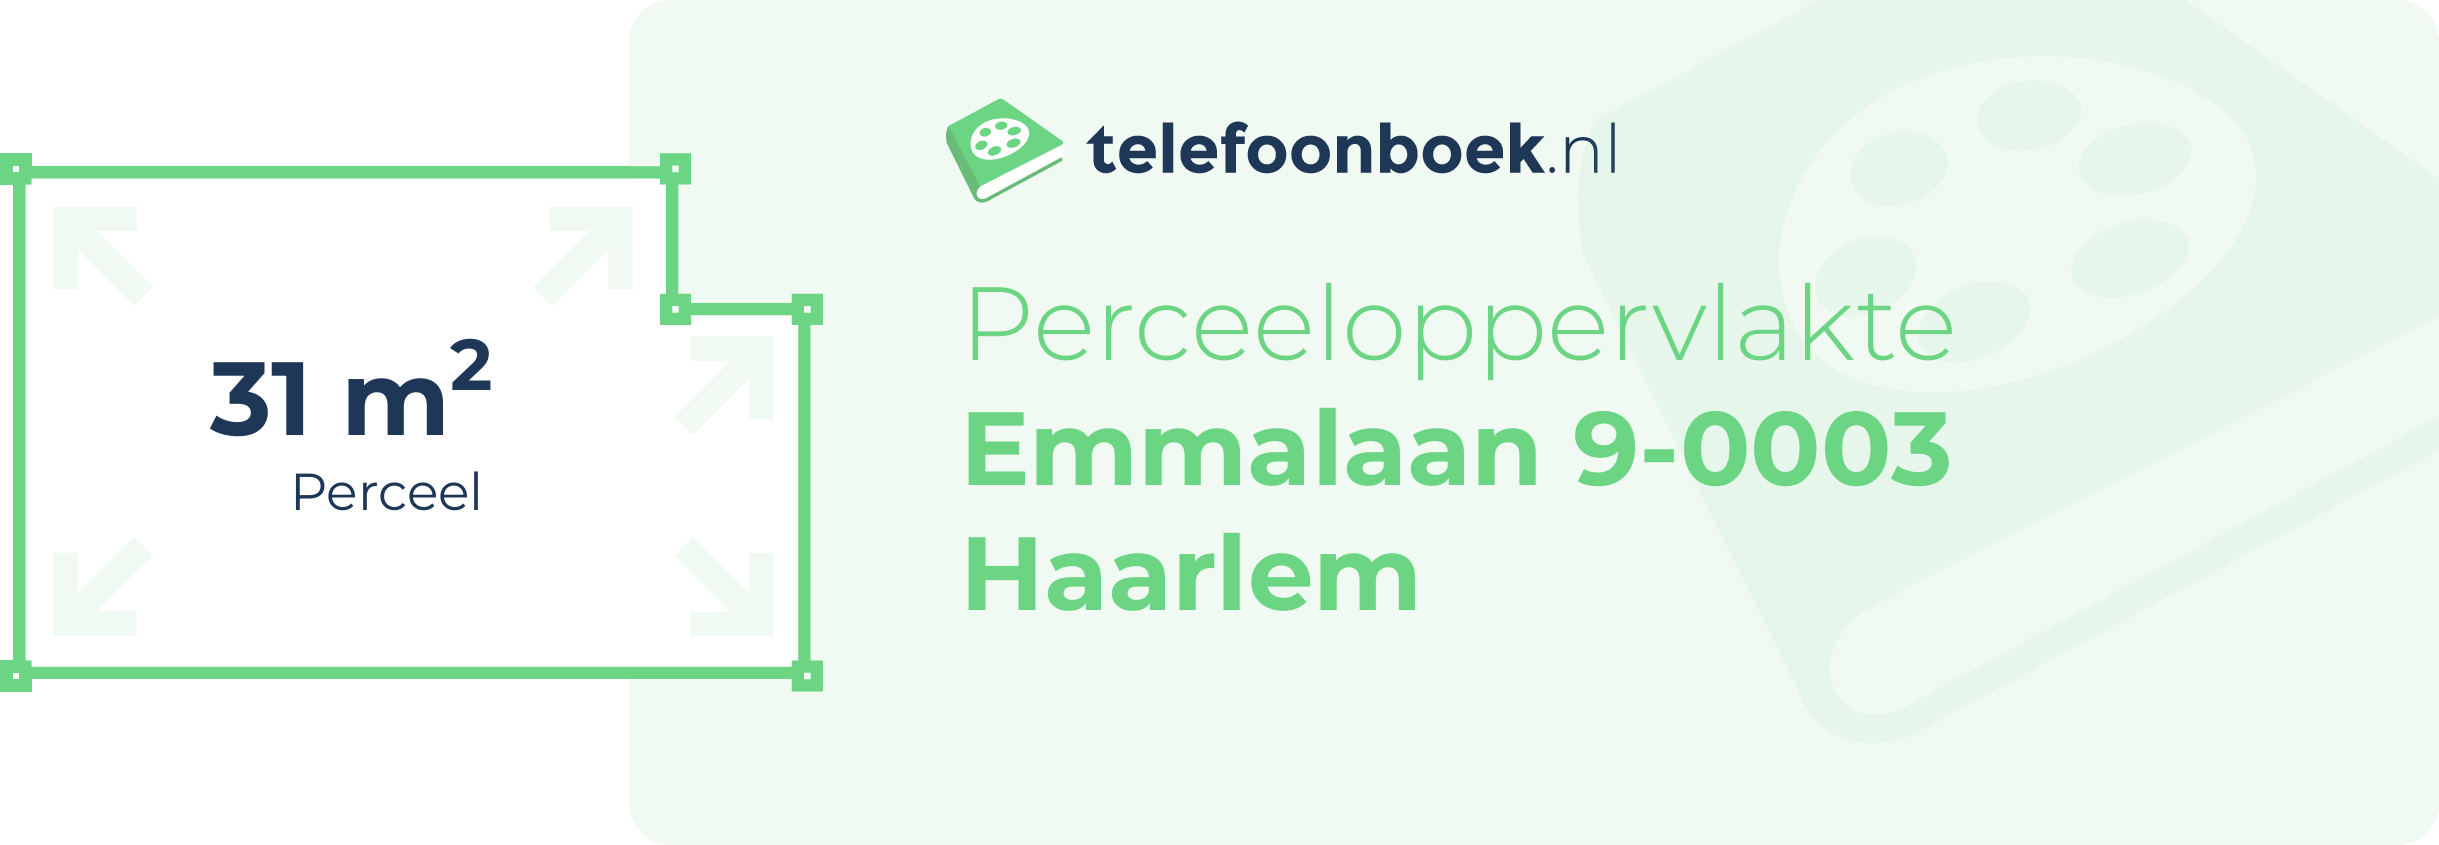 Perceeloppervlakte Emmalaan 9-0003 Haarlem